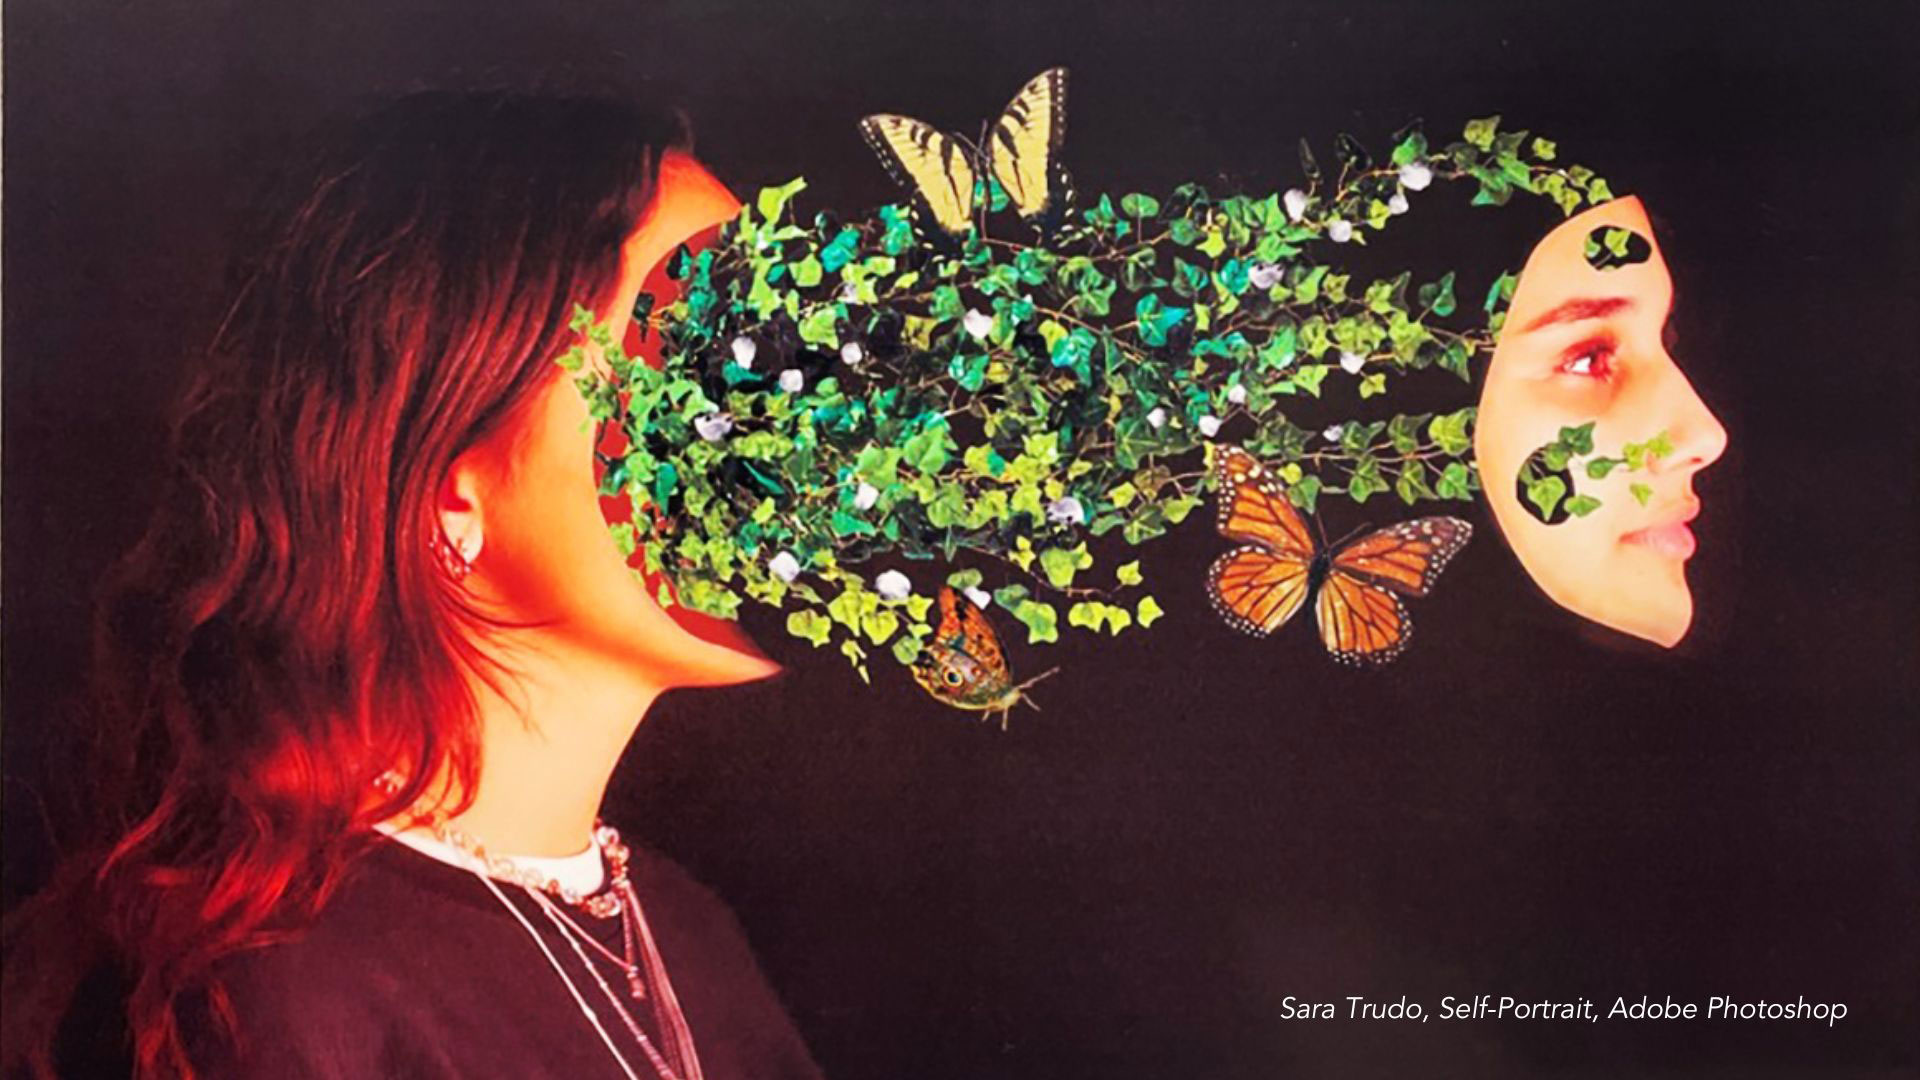 Sara Trudo, Self-Portrait, Adobe Photoshop